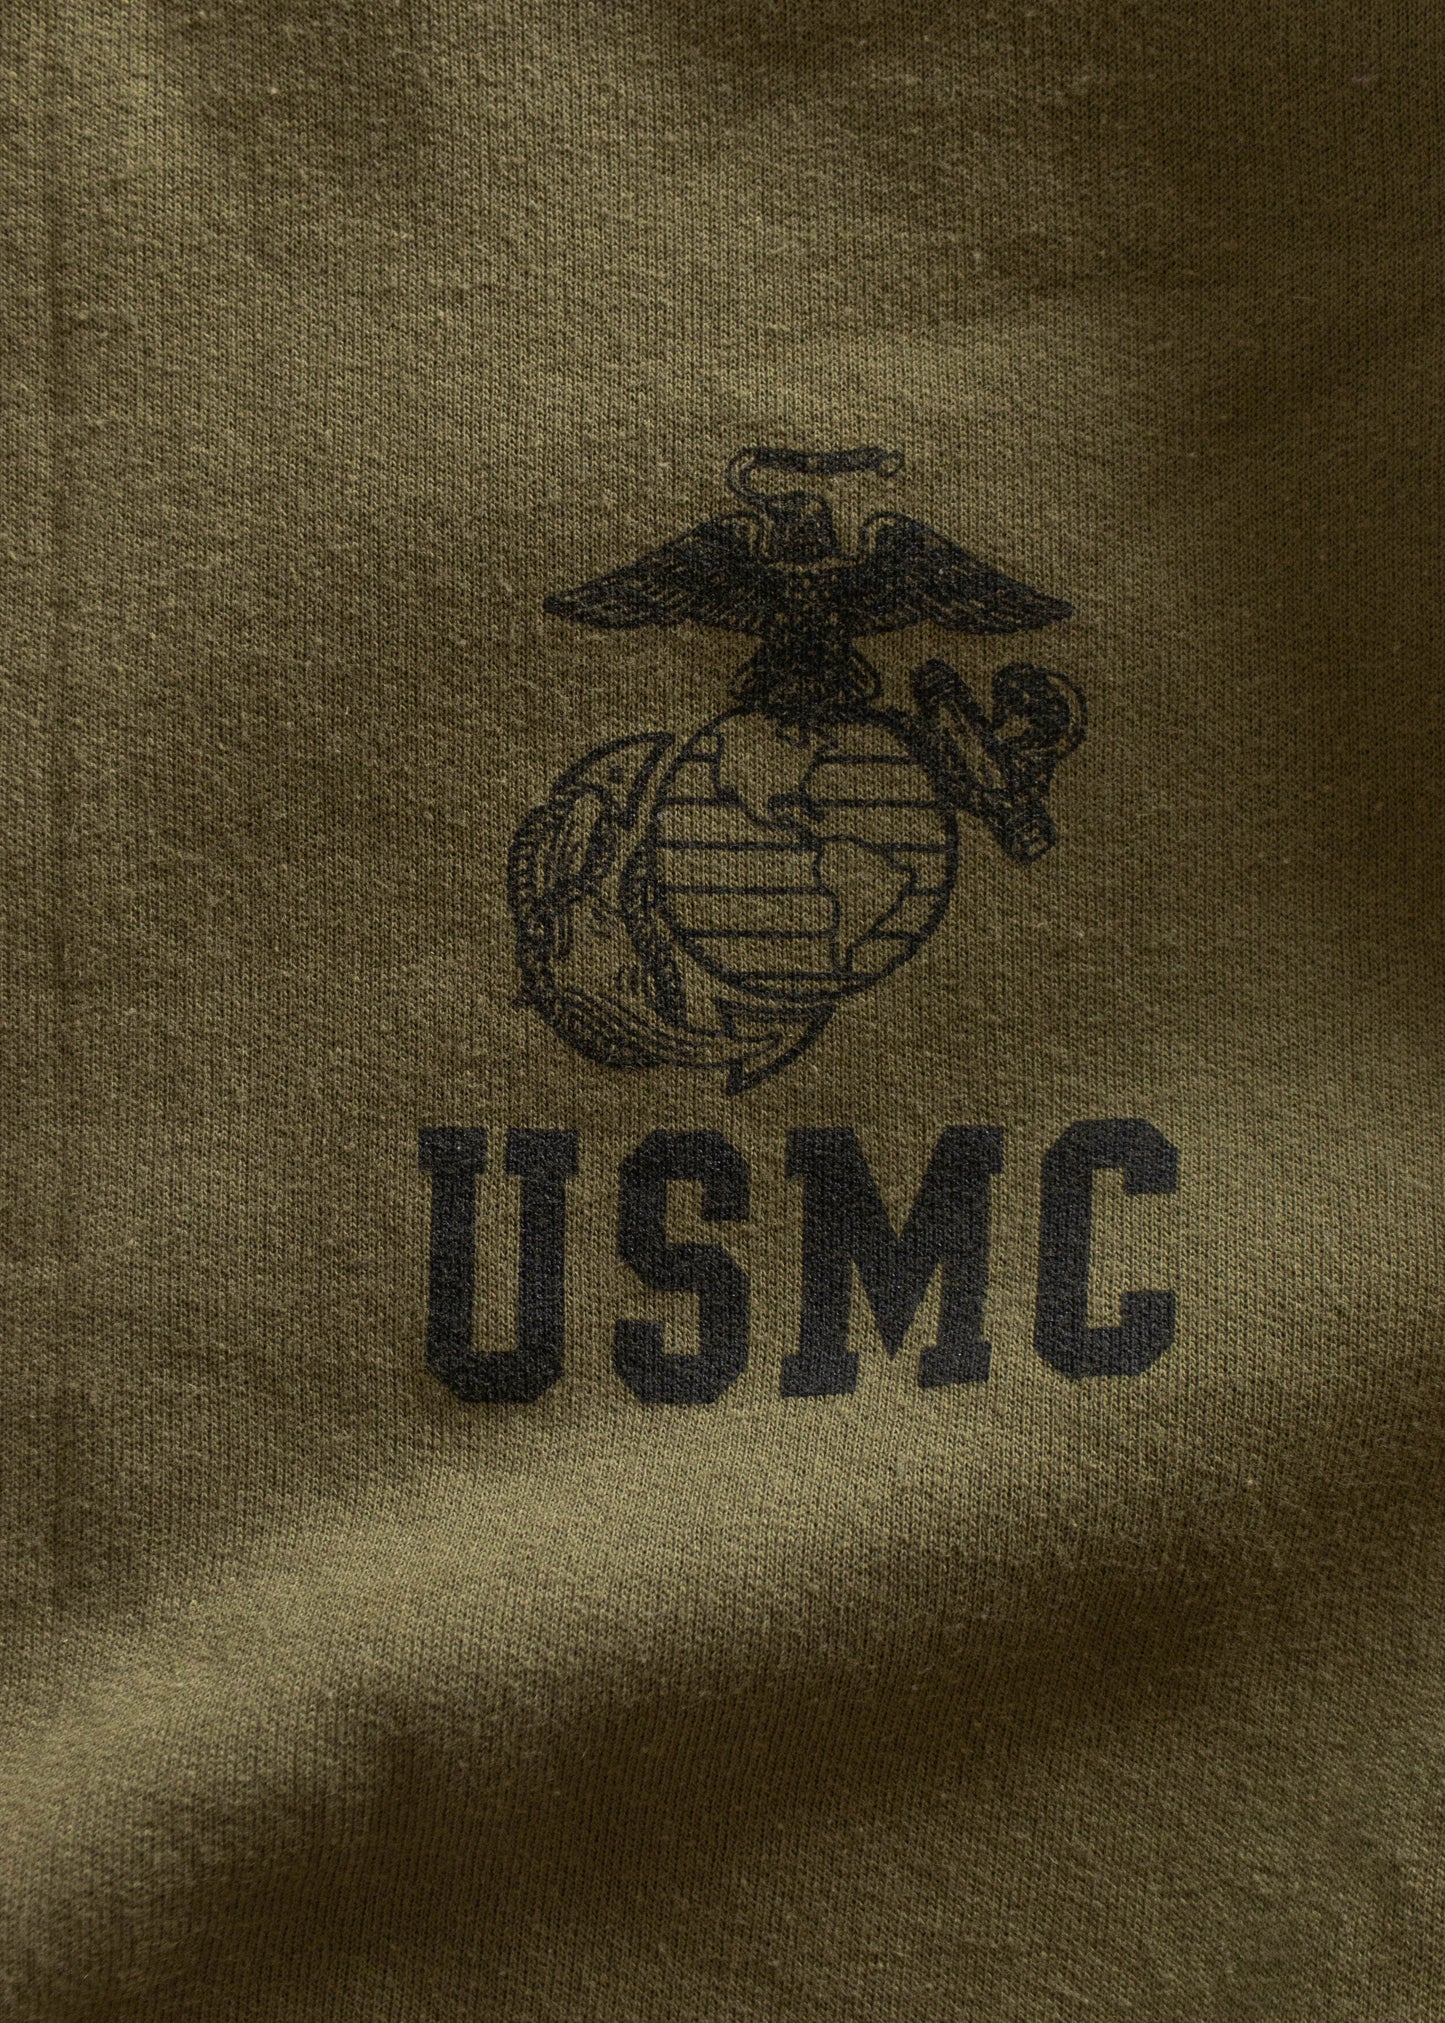 1990s USMC Sweatshirt Size M/L